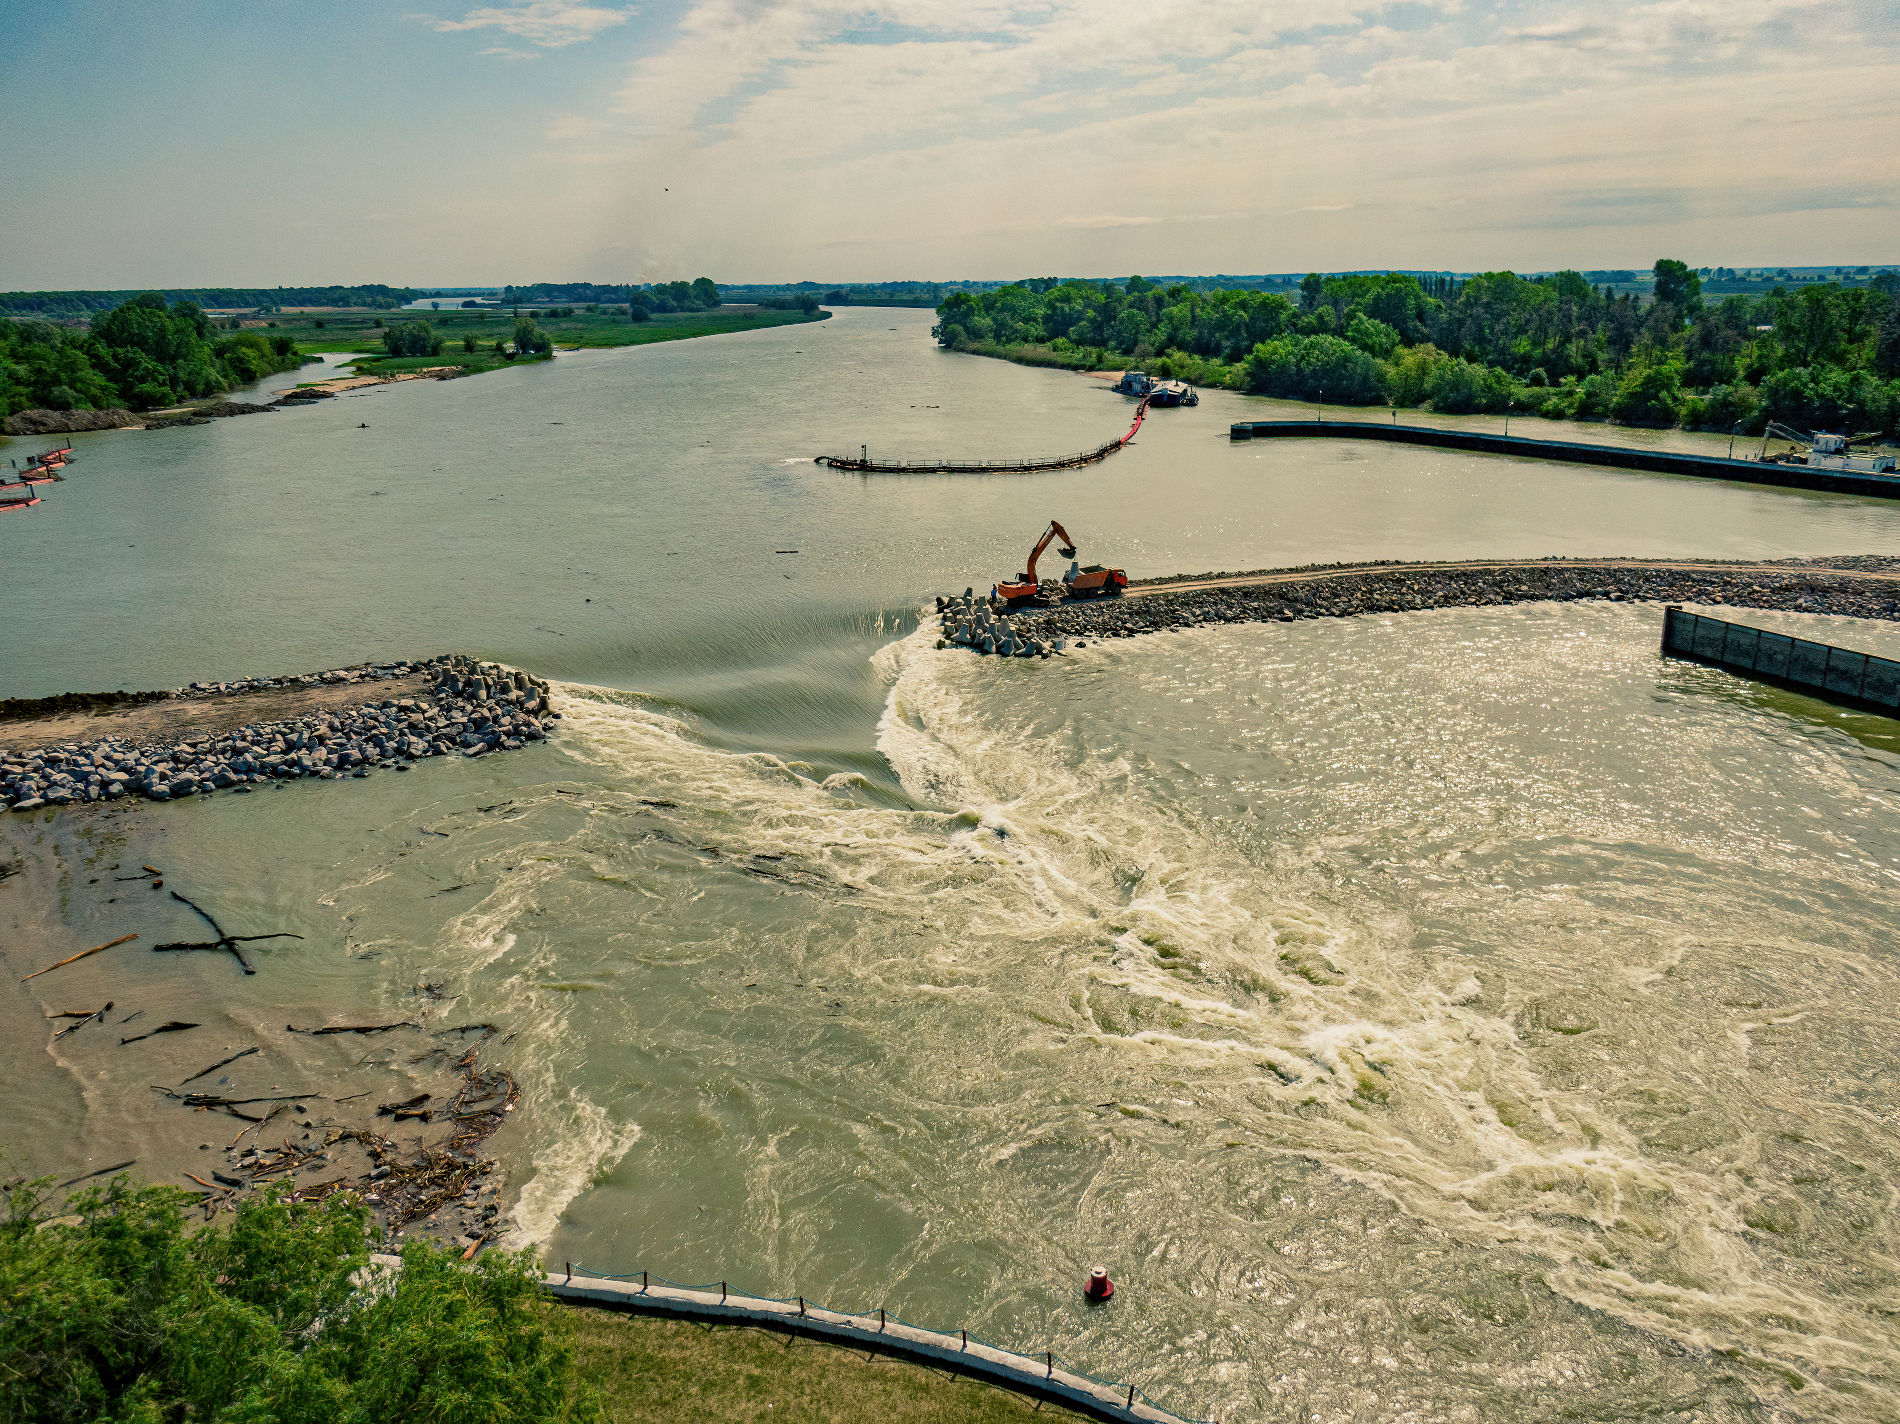 Спокойствие реки Кубани обманчиво © Фото Антона Быкова, Юга.ру